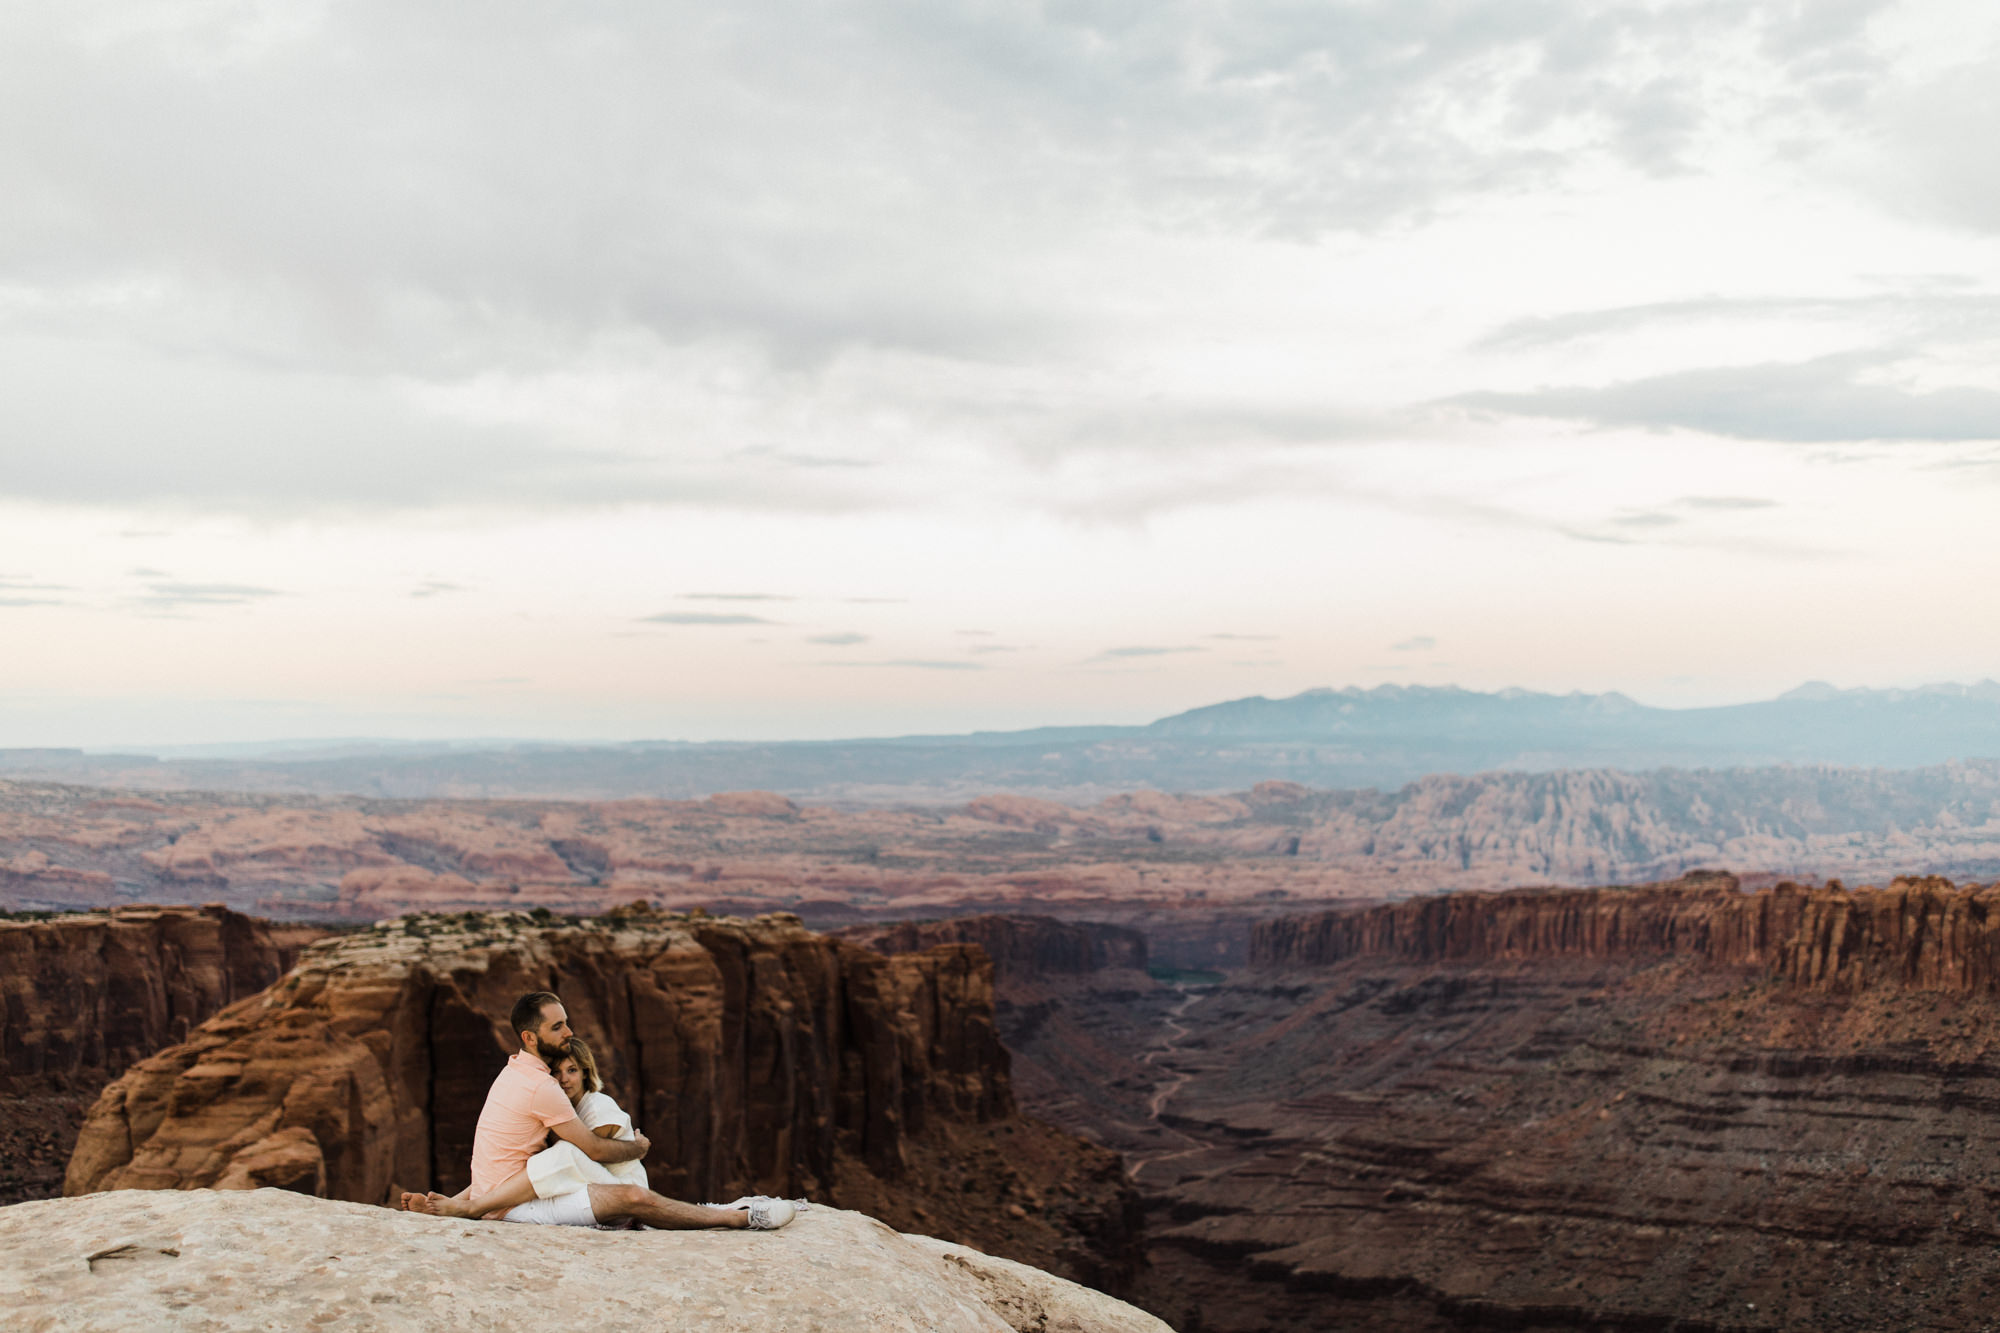 moab, utah adventure elopement session | destination engagement photo inspiration | utah adventure elopement photographers | the hearnes adventure photography | www.thehearnes.com